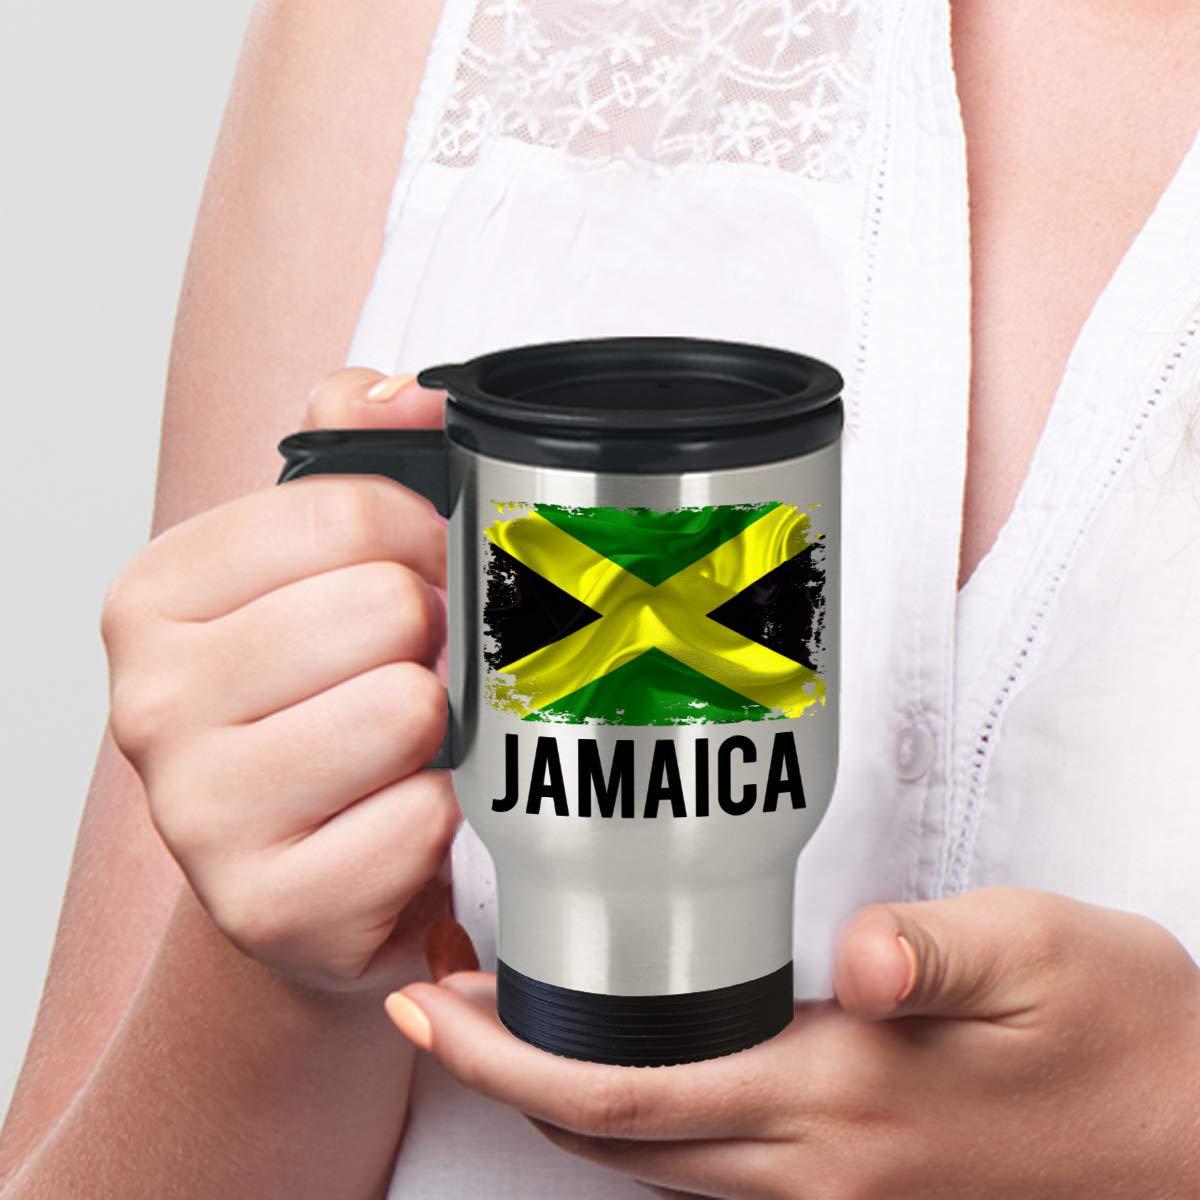 Cool Proud Gift jamaica, rasta reggae travel coffee mug funny gifts - jamaican pride flag hometown country pride, travel, souvenir, vintage c